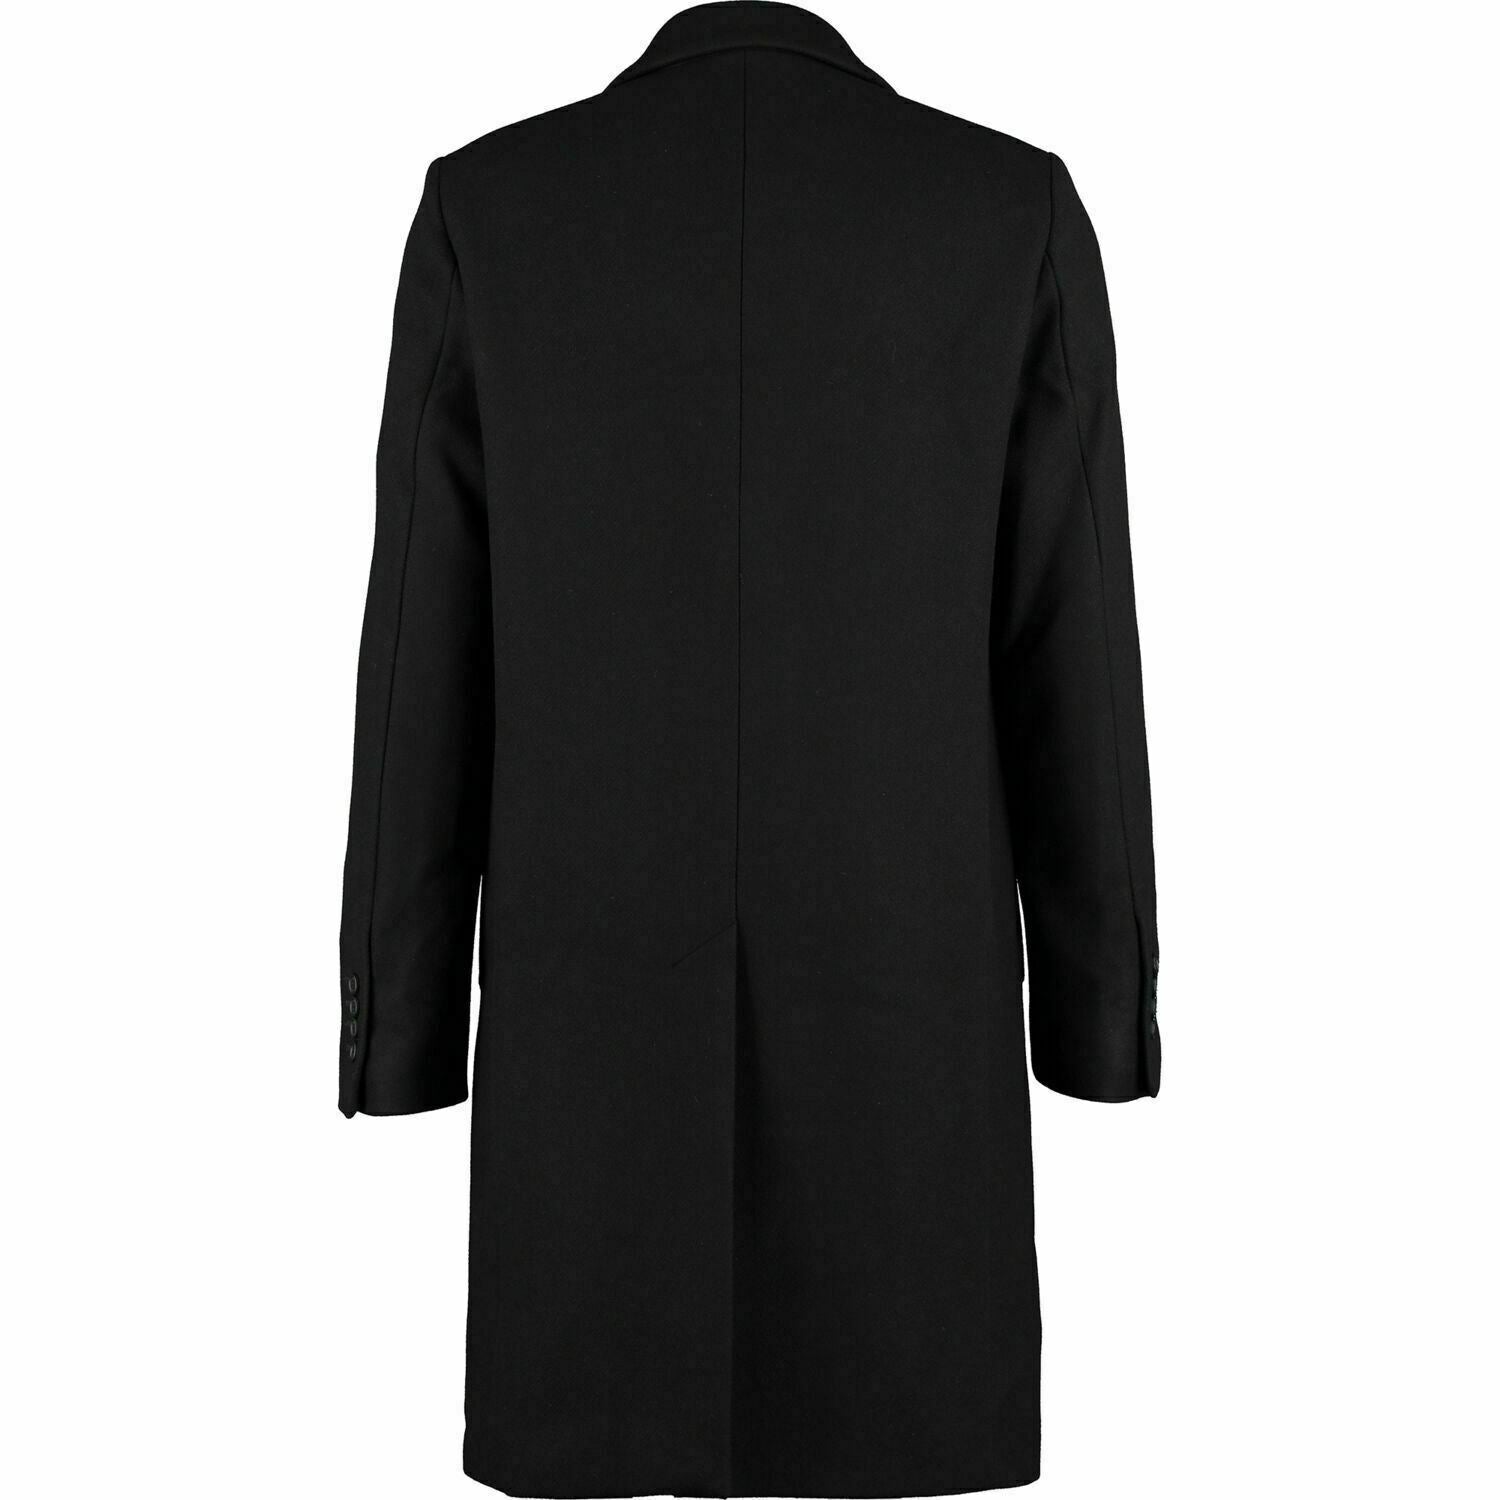 LOVE MOSCHINO Men's Black Wool Blend Coat, 80% Wool, Printed Shoulder, size 40